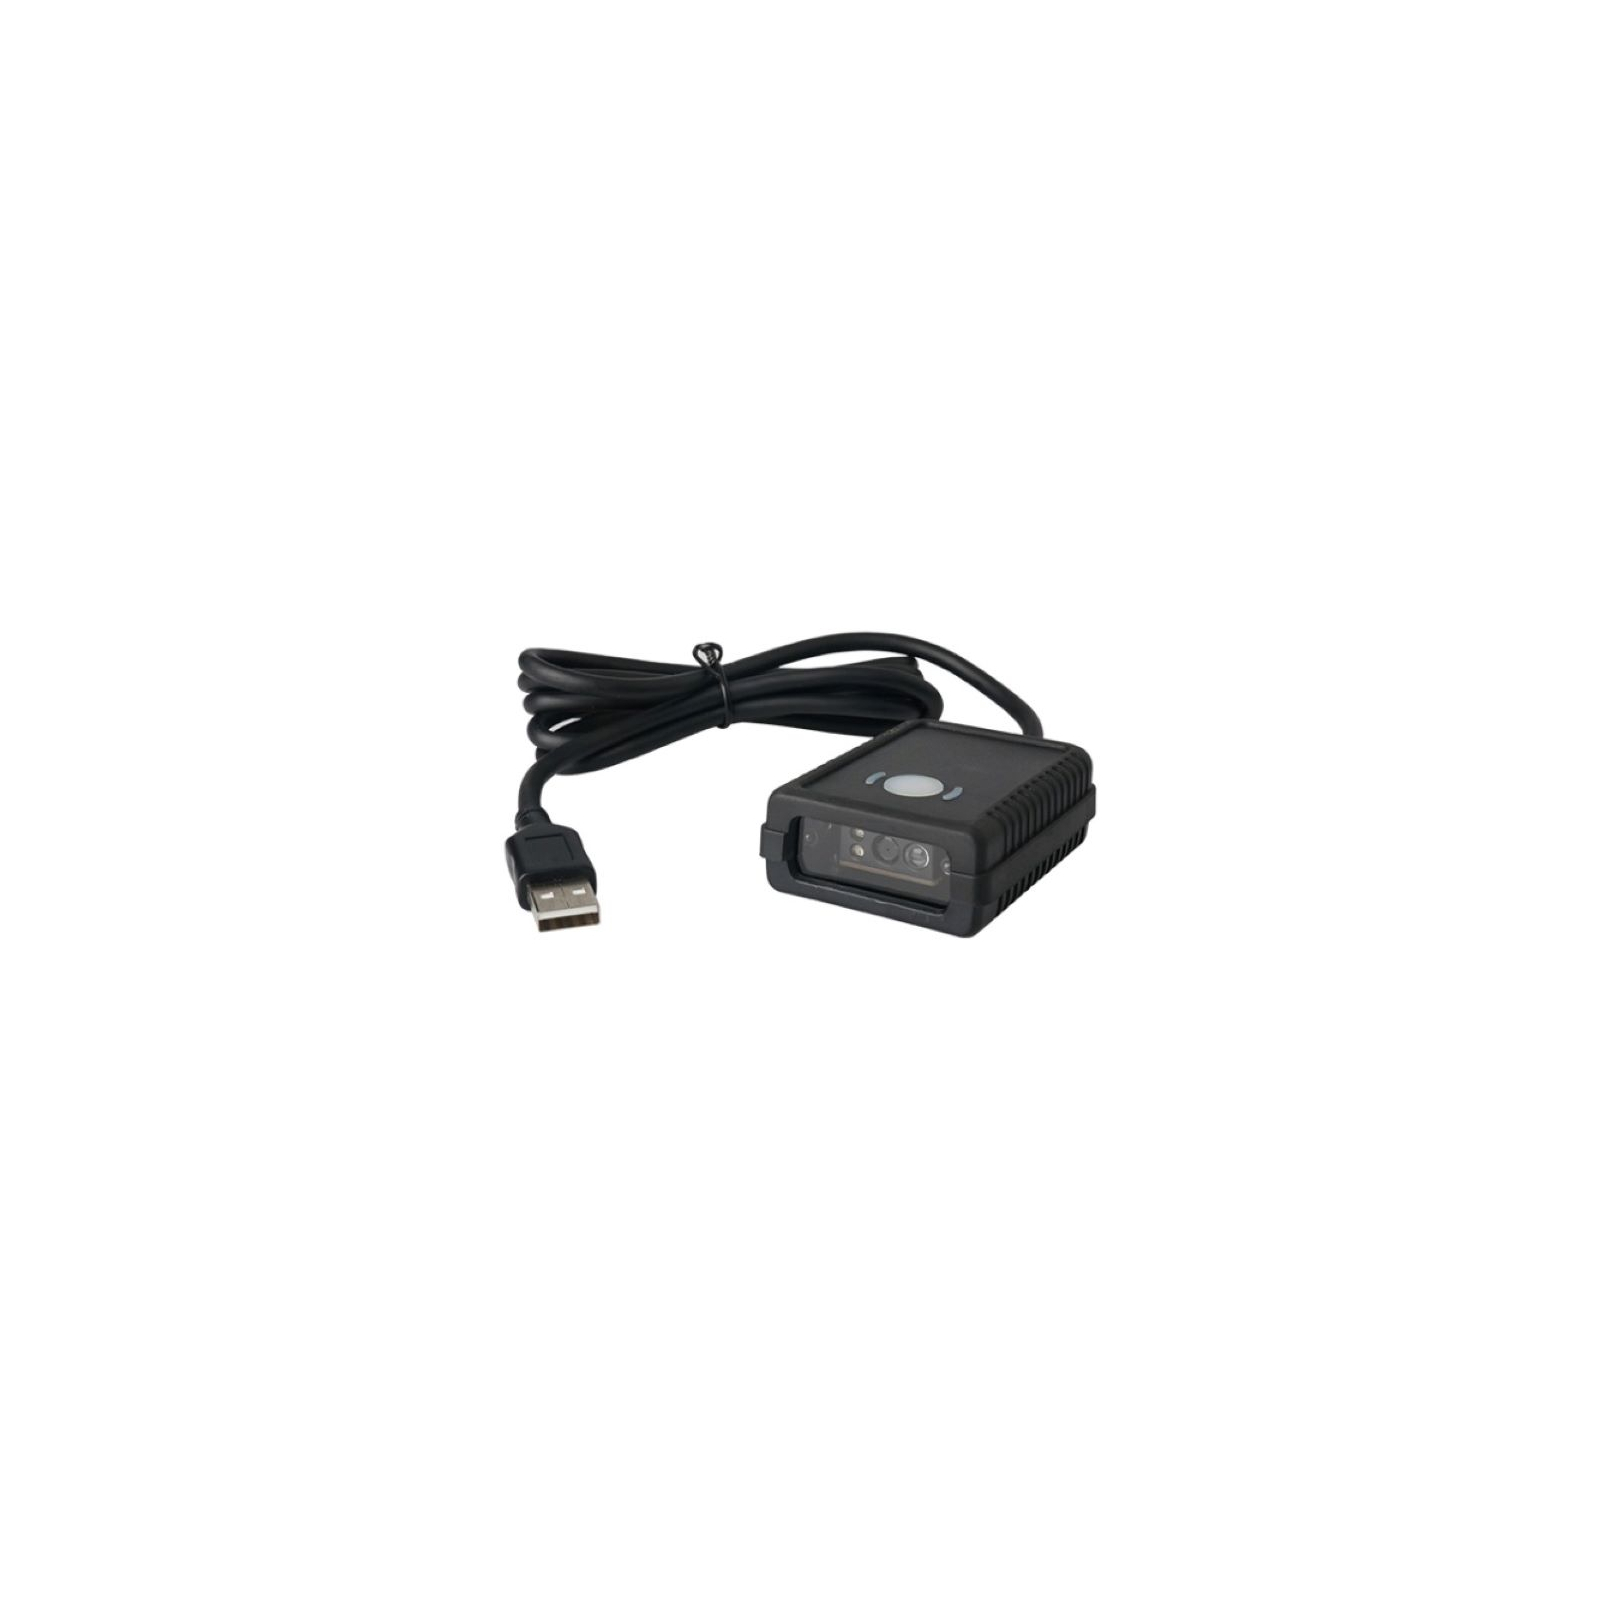 Сканер штрих-кода Xkancode FS20, 2D, USB, black (FS20) изображение 2